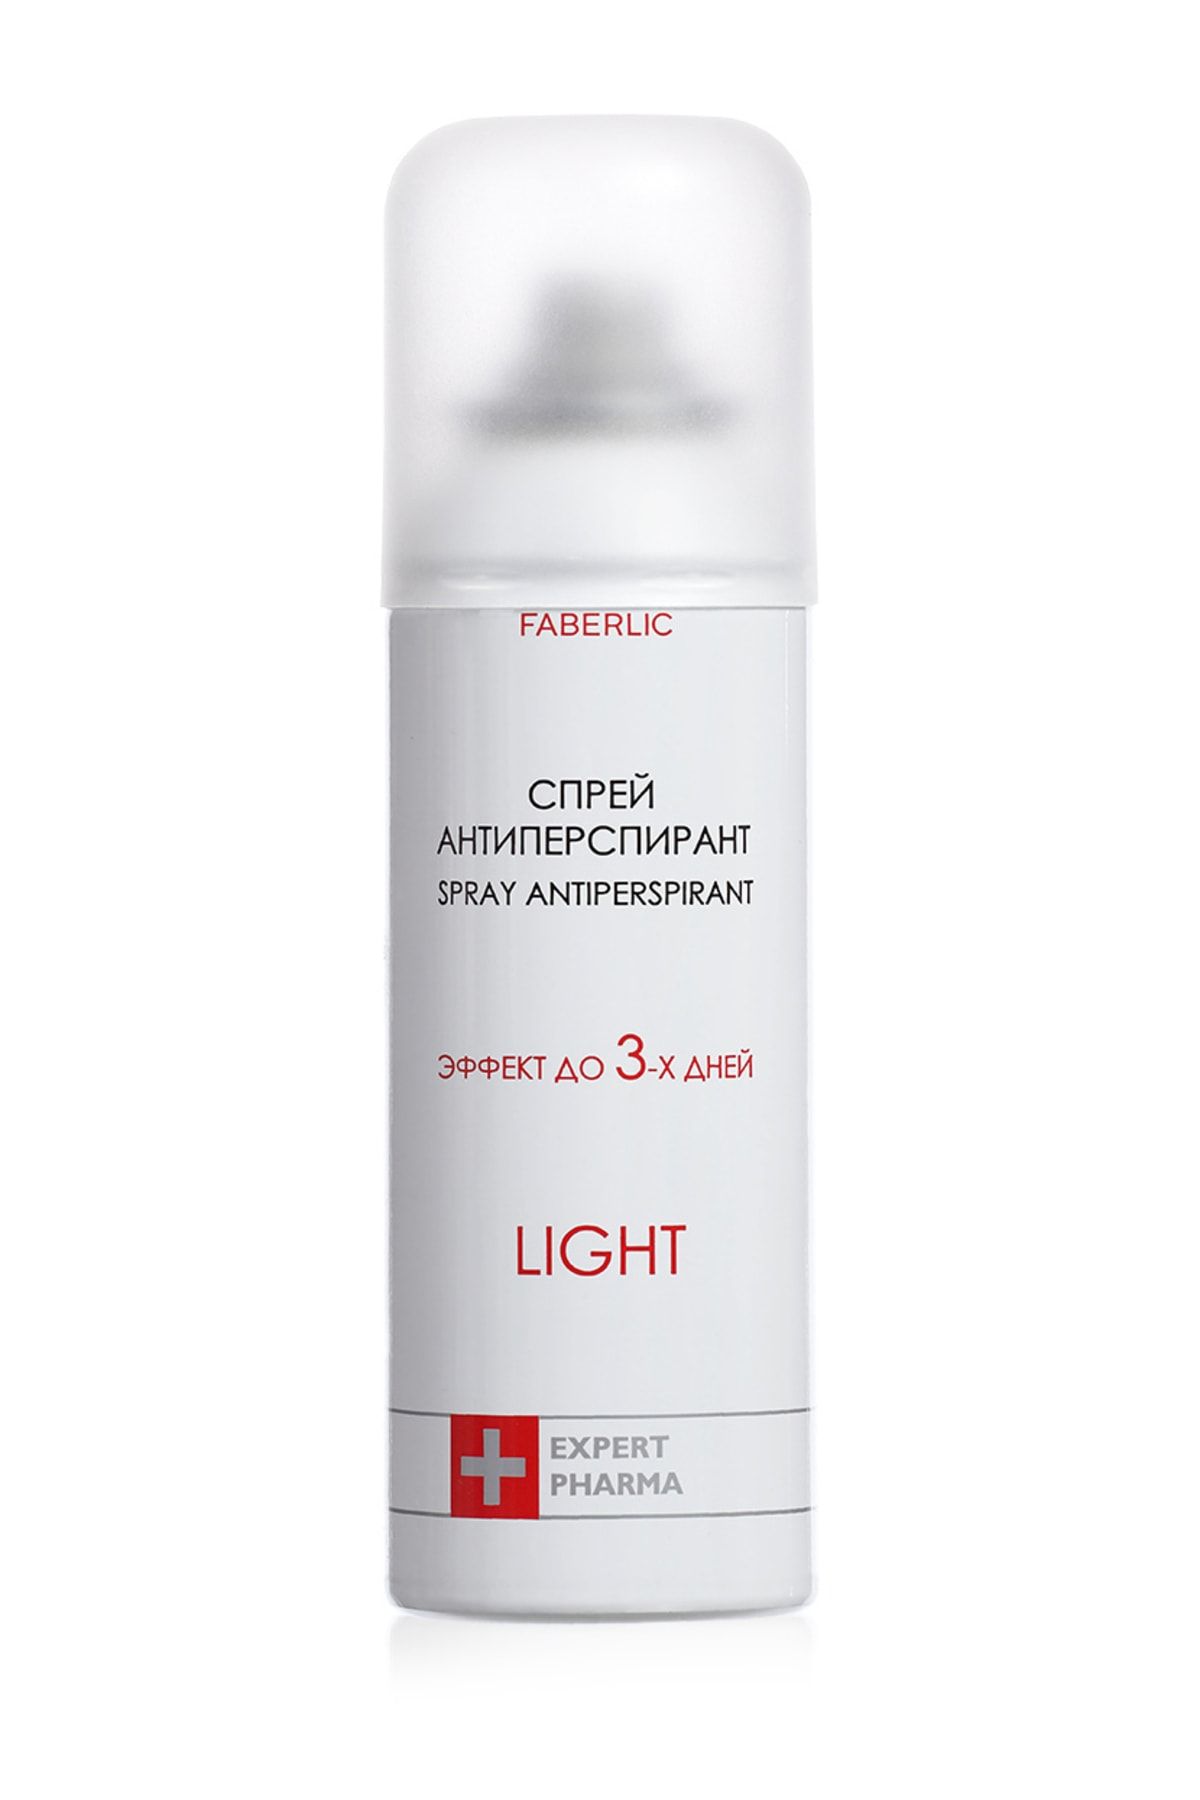 Faberlic Pharma Light Antiperspirant Deodorant